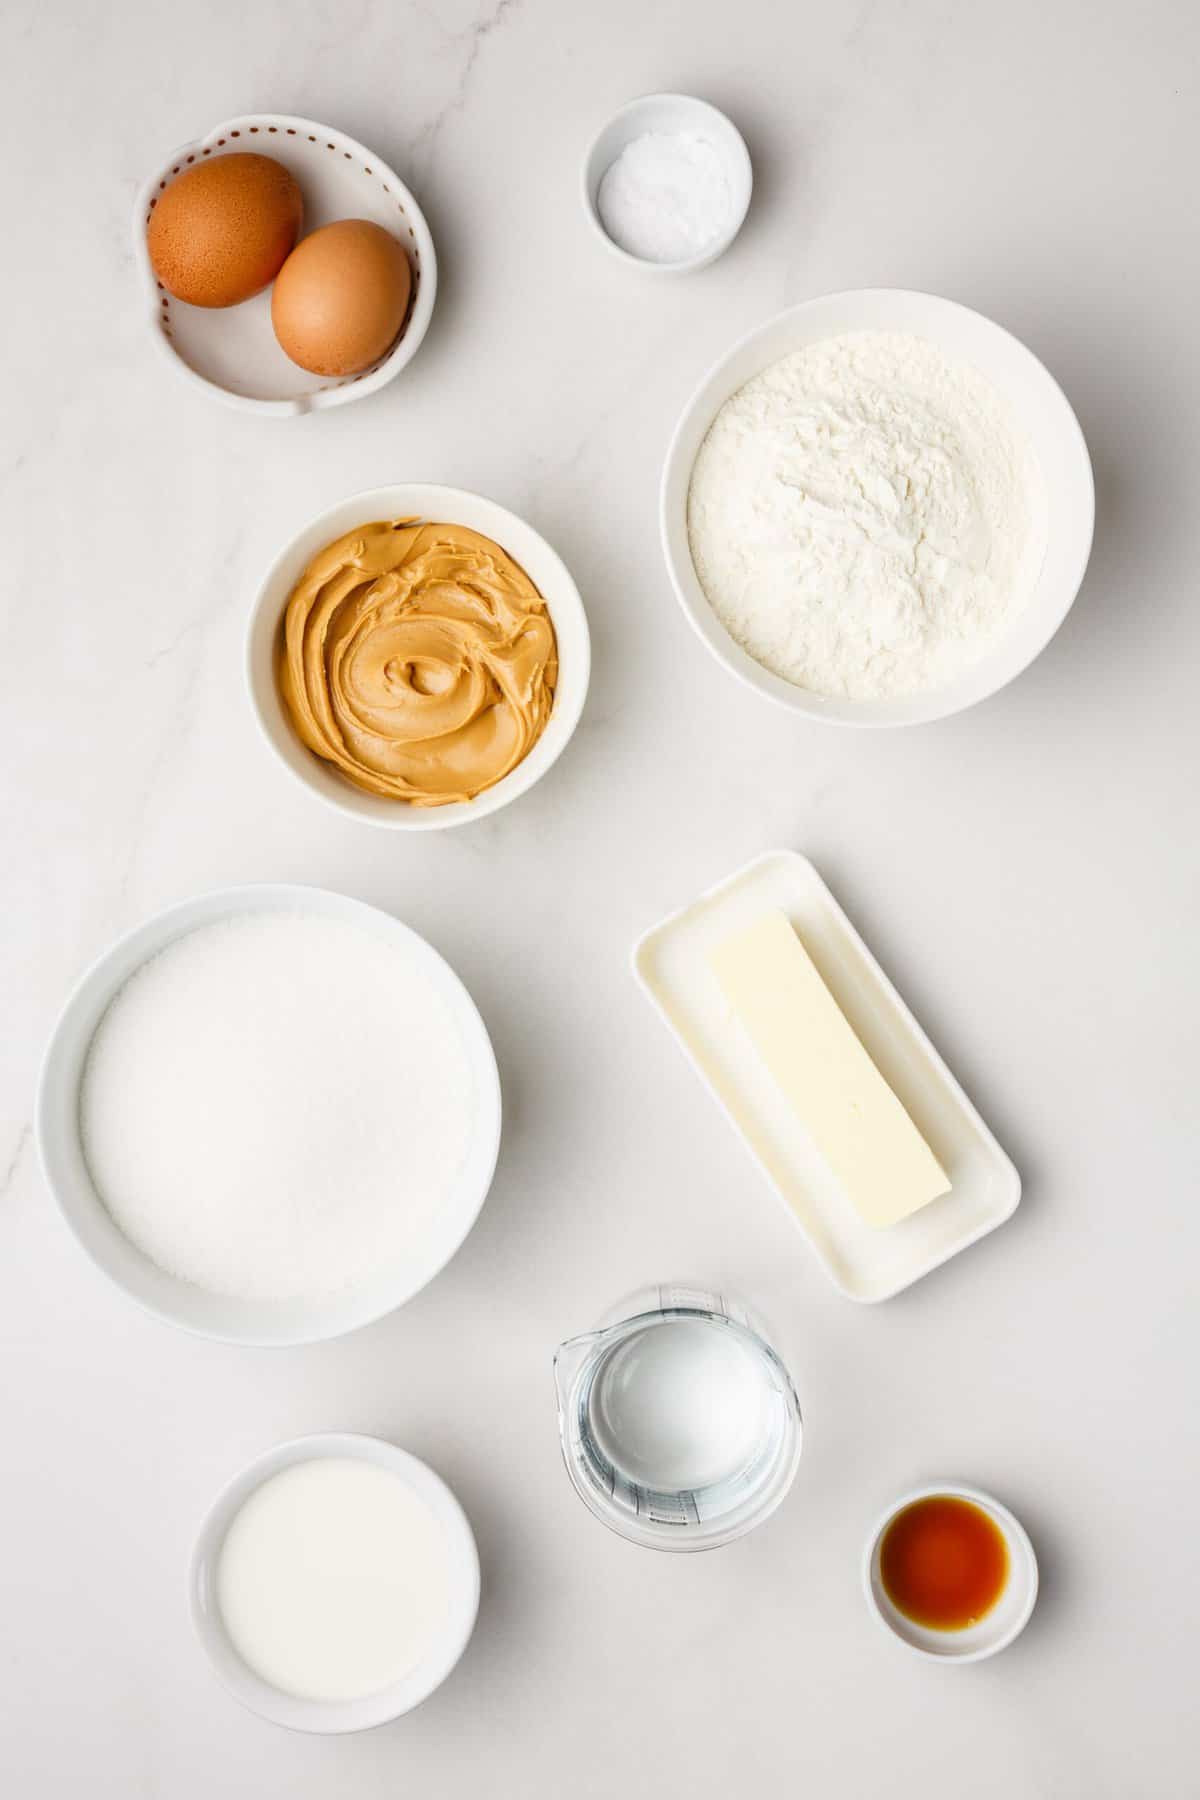 ingredients to make peanut butter cake